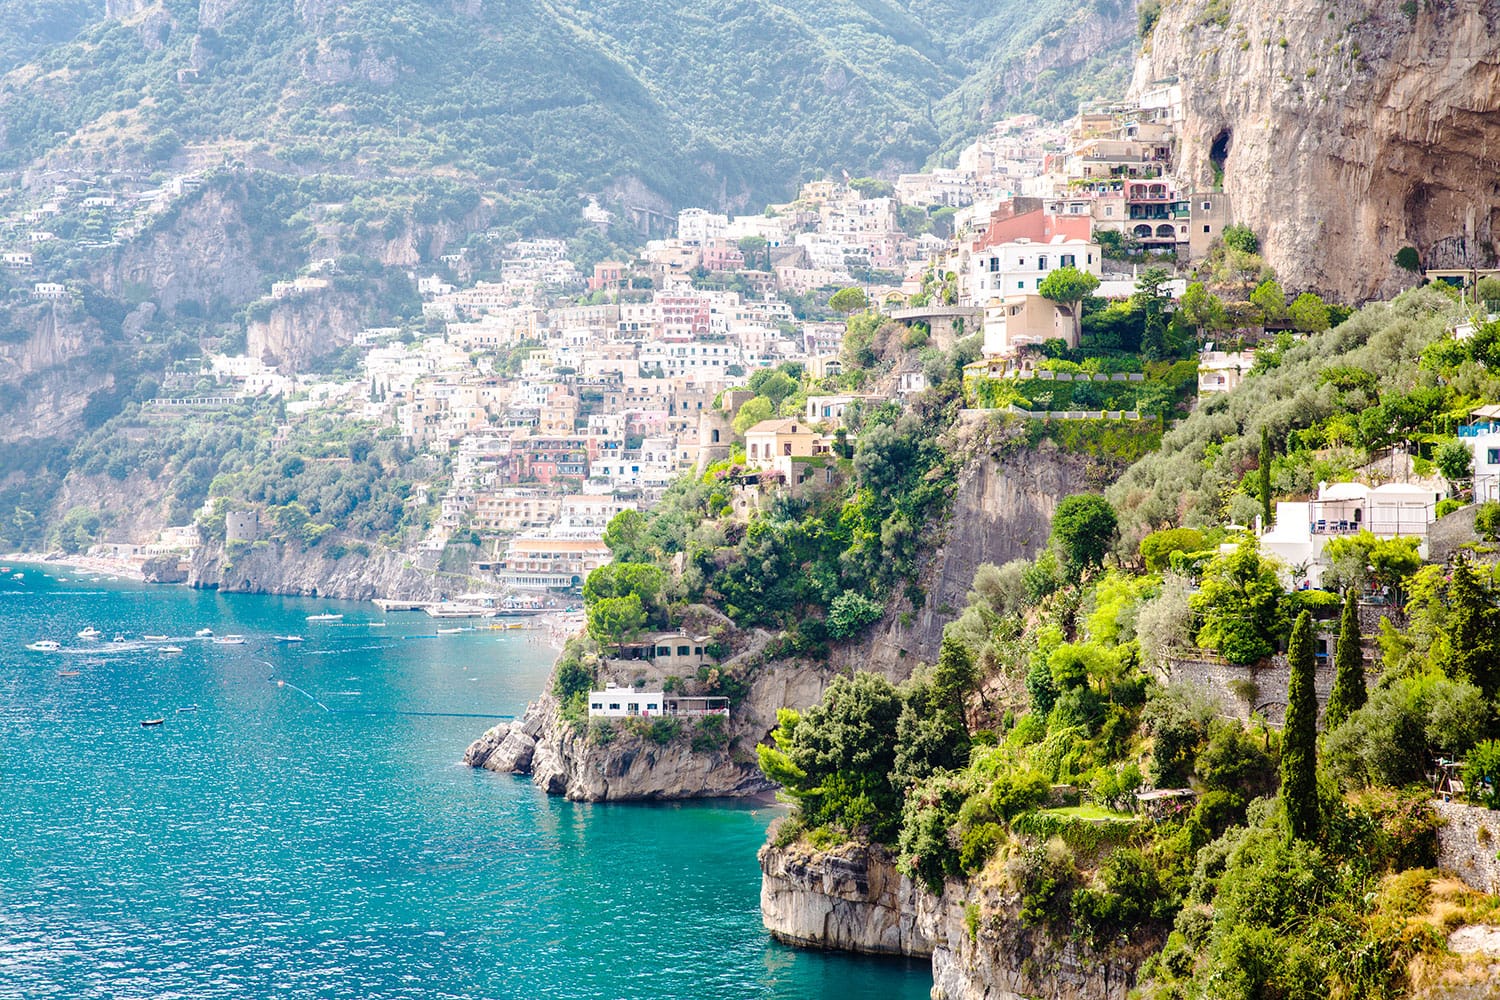 Positano on the Amalfi Coast in Italy